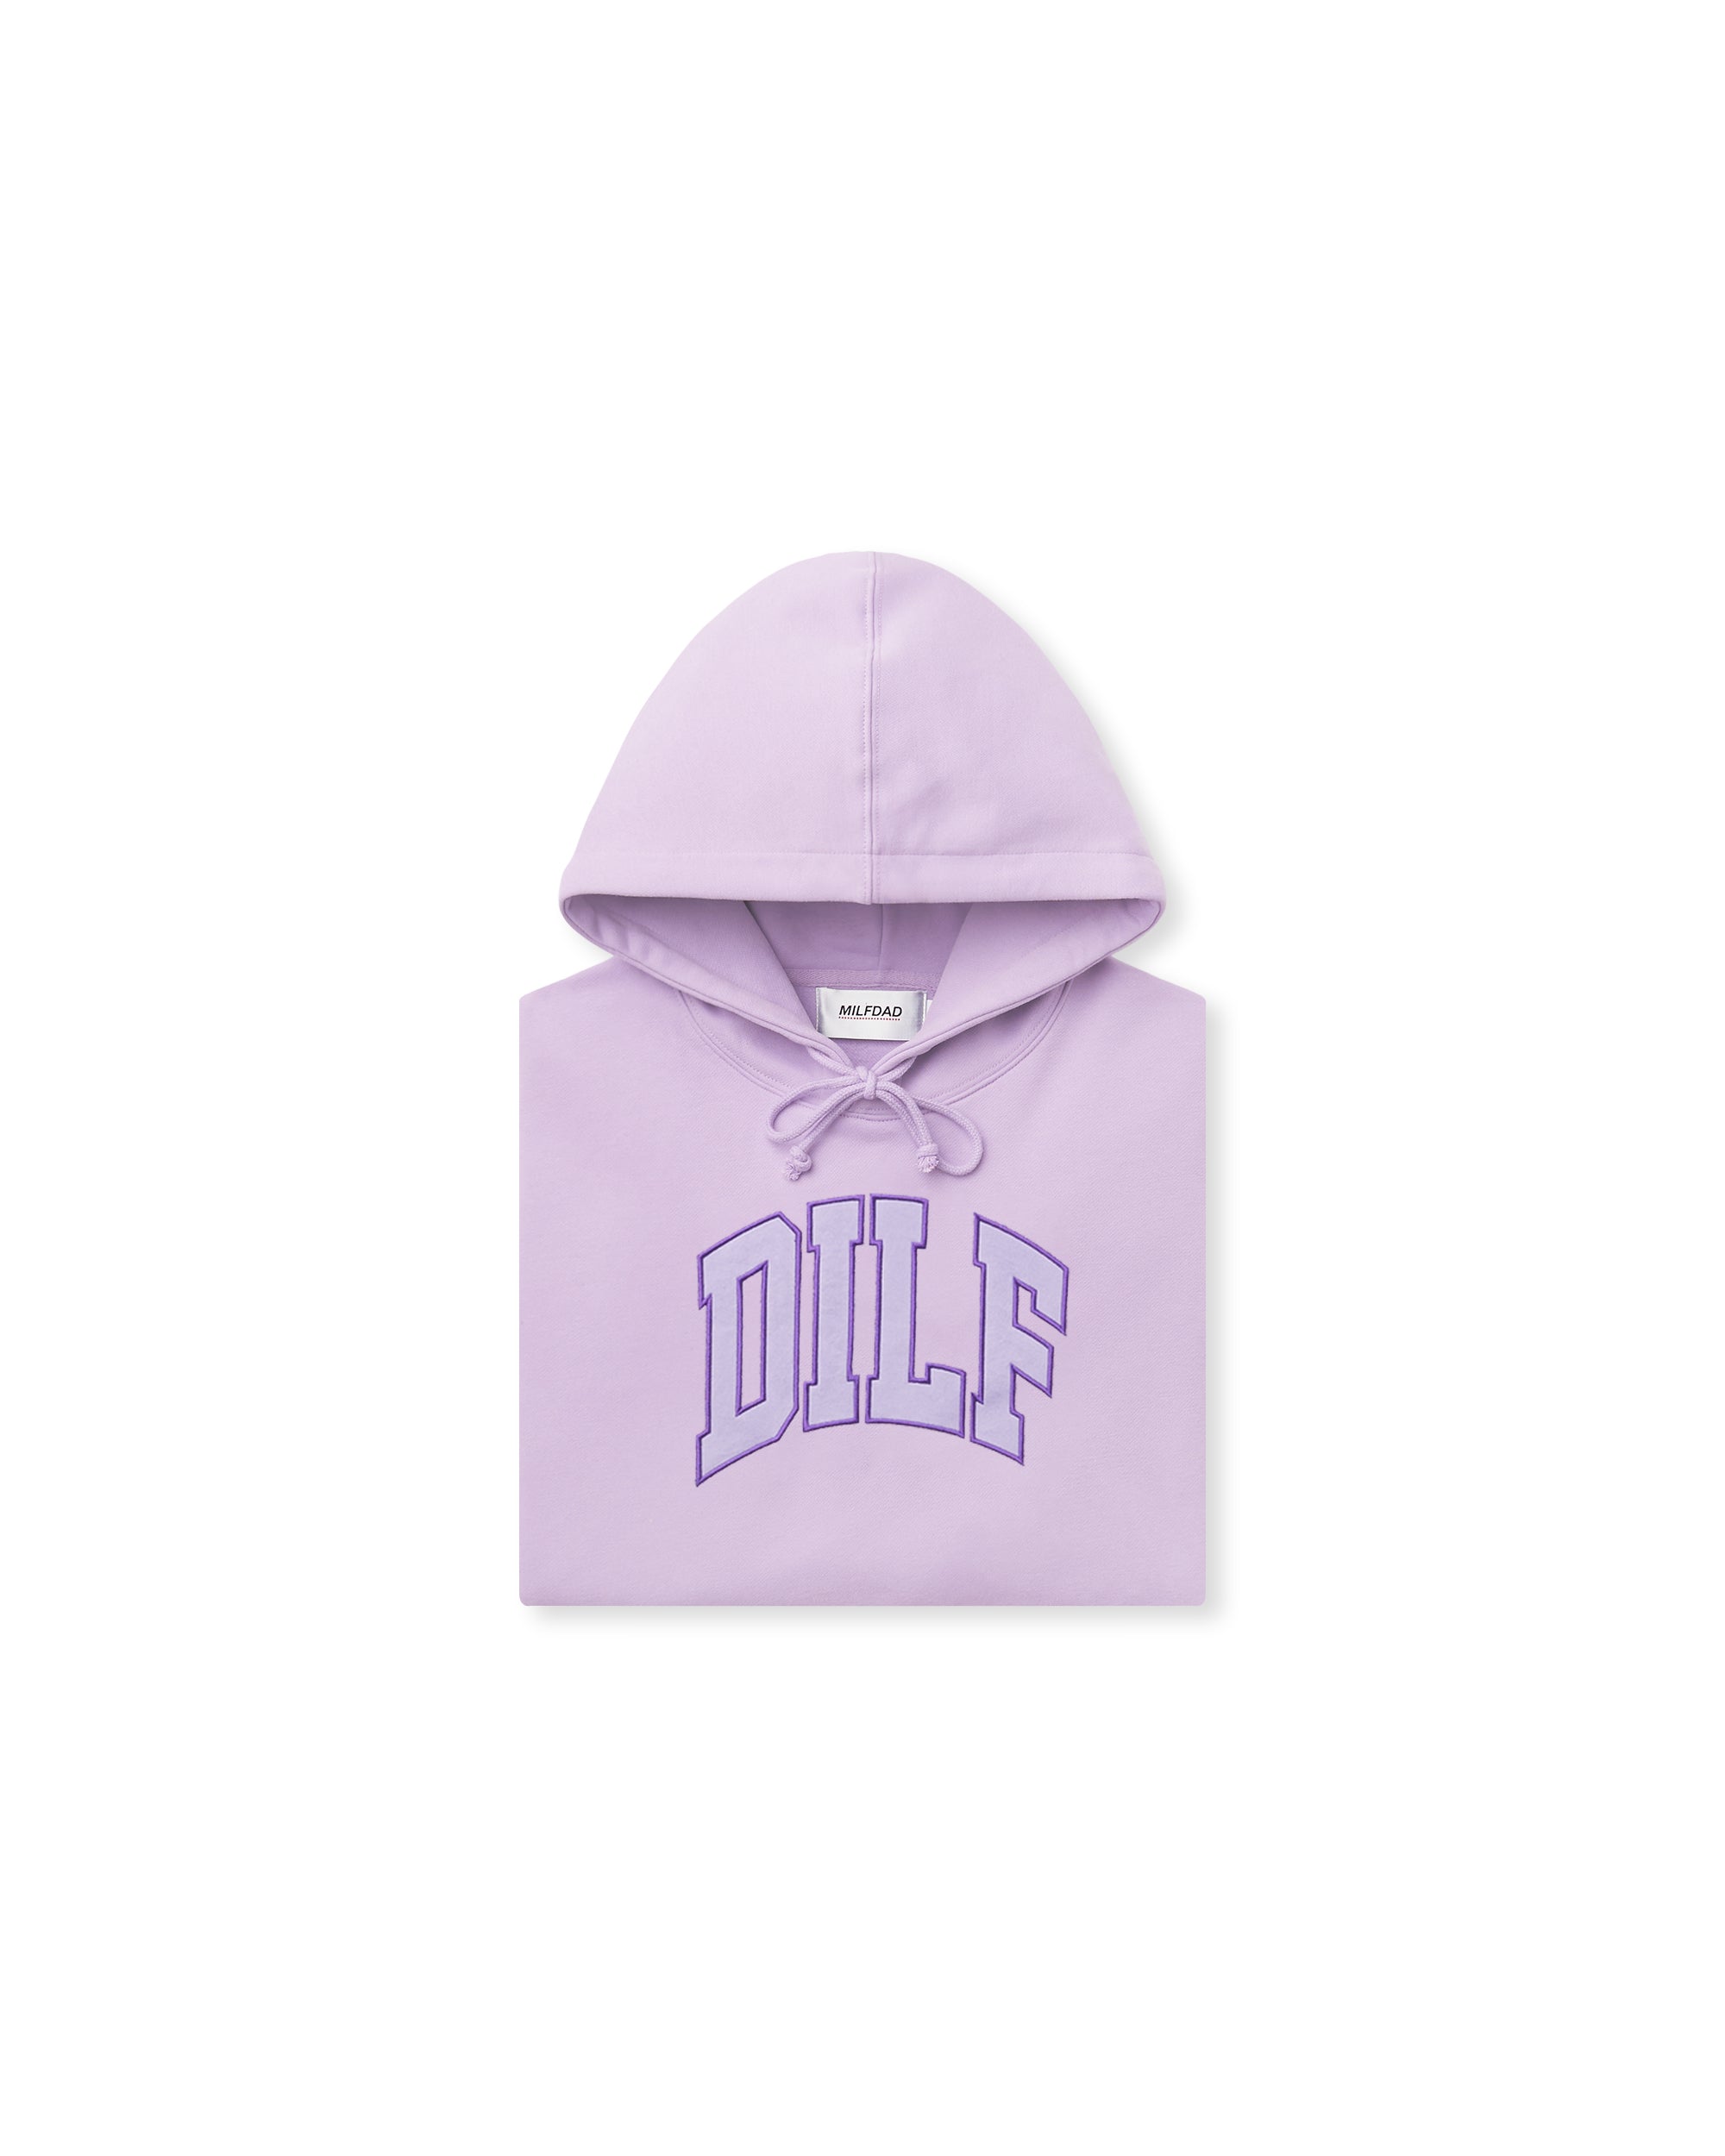 DILF Arc Logo Hoodie - Lavender